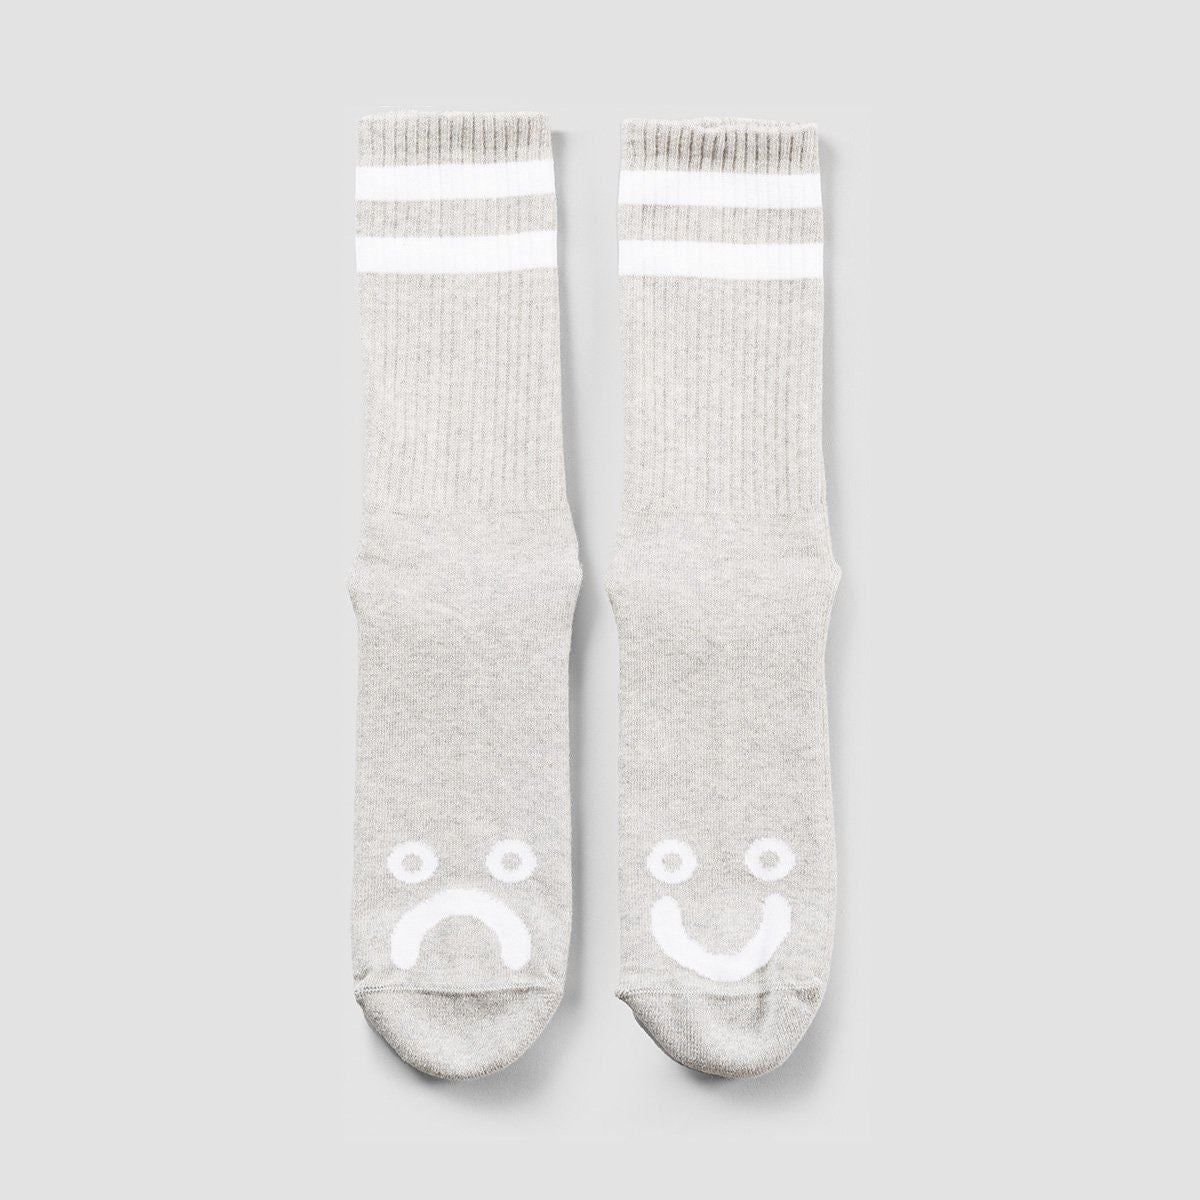 Polar Happy Sad Socks Heather Grey - Unisex